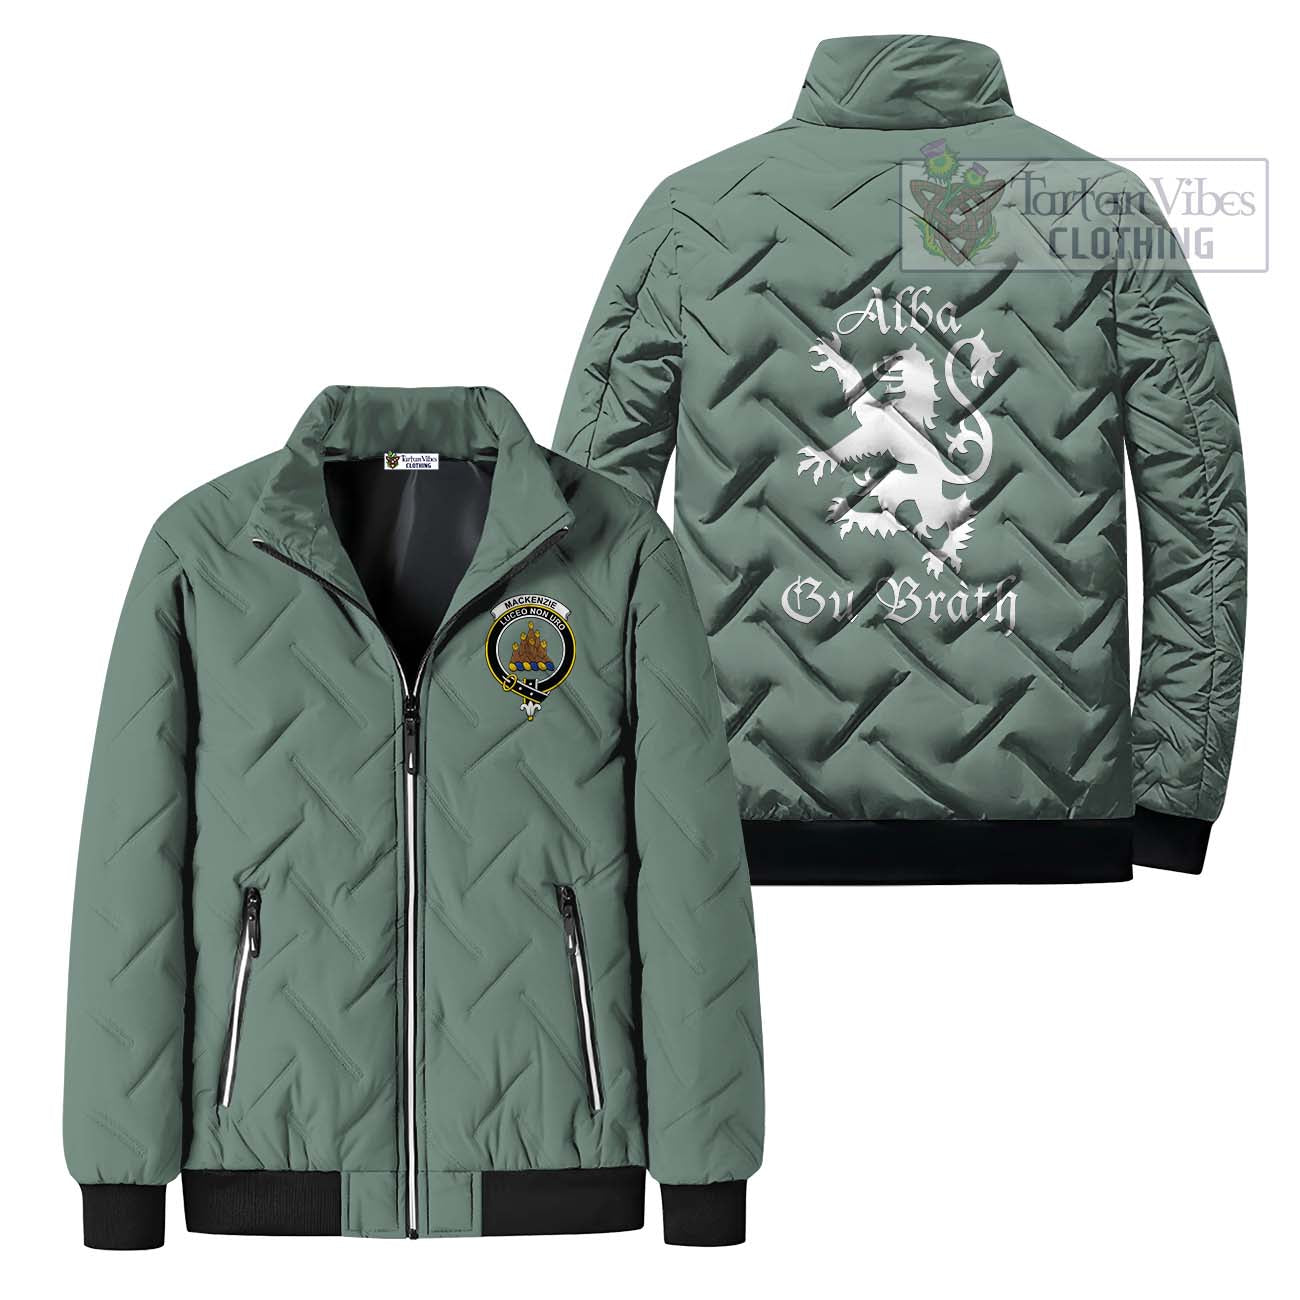 Tartan Vibes Clothing MacKenzie Family Crest Padded Cotton Jacket Lion Rampant Alba Gu Brath Style